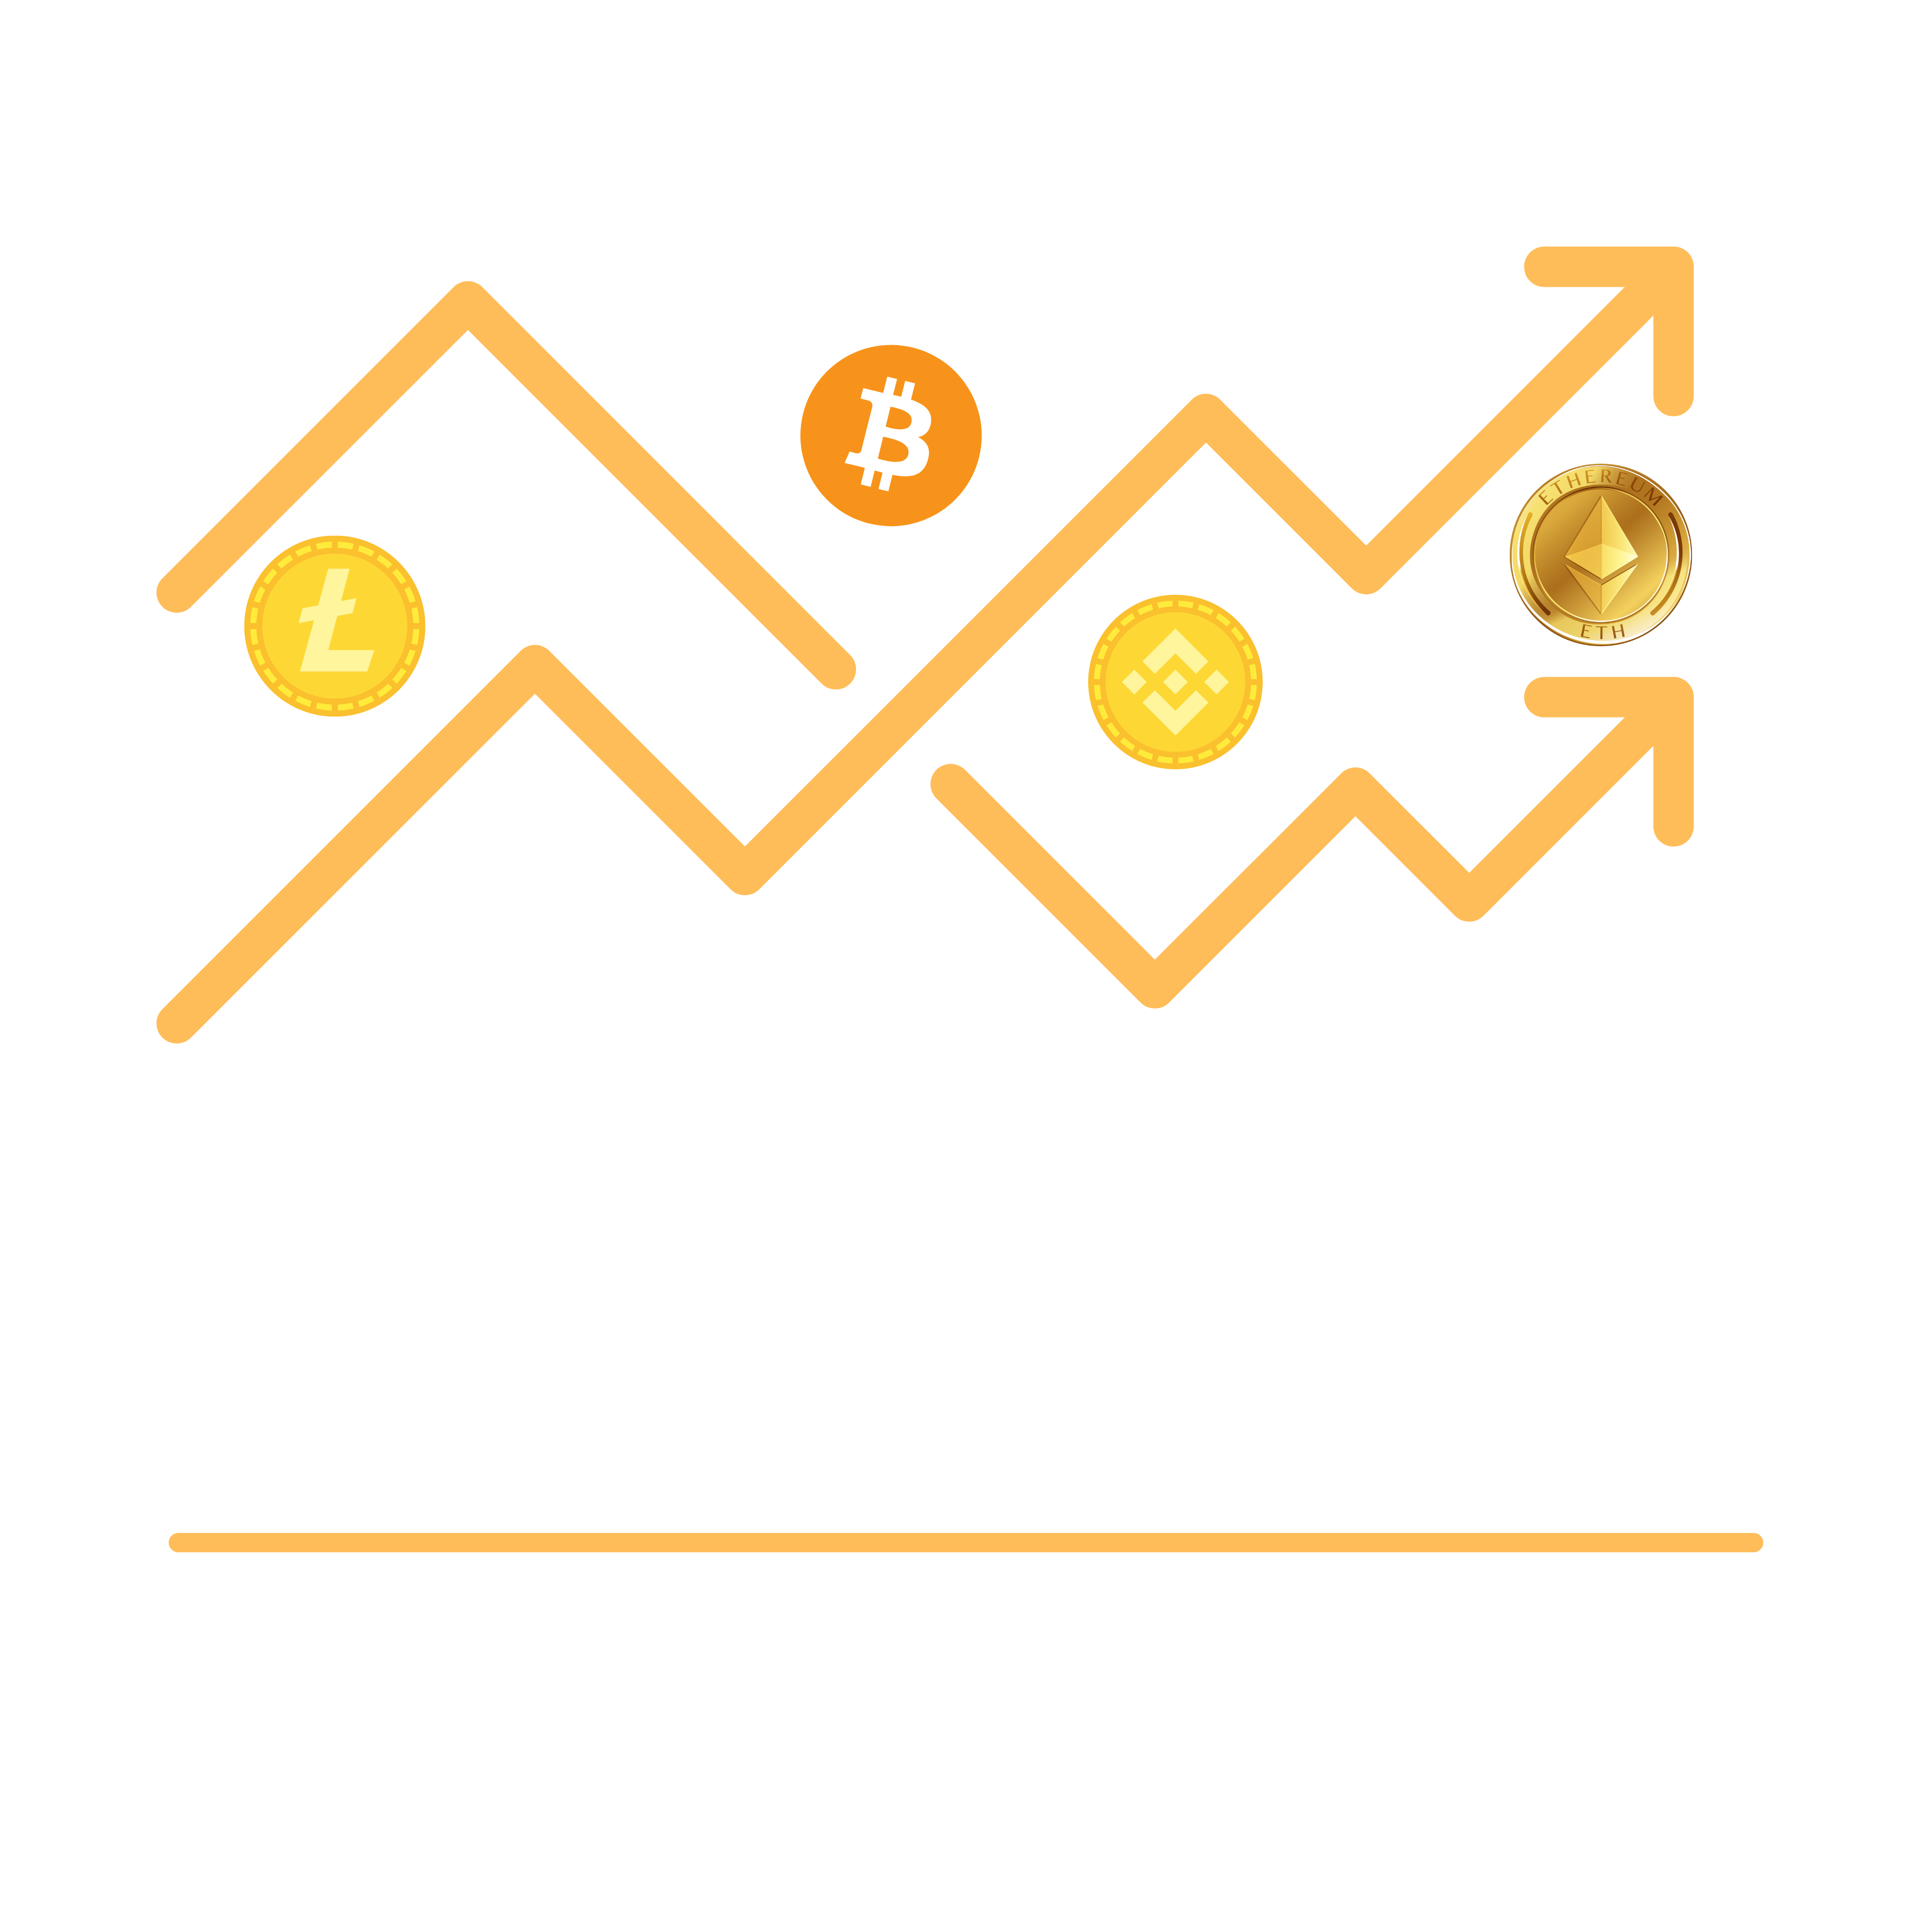 Crypto Bot Trading